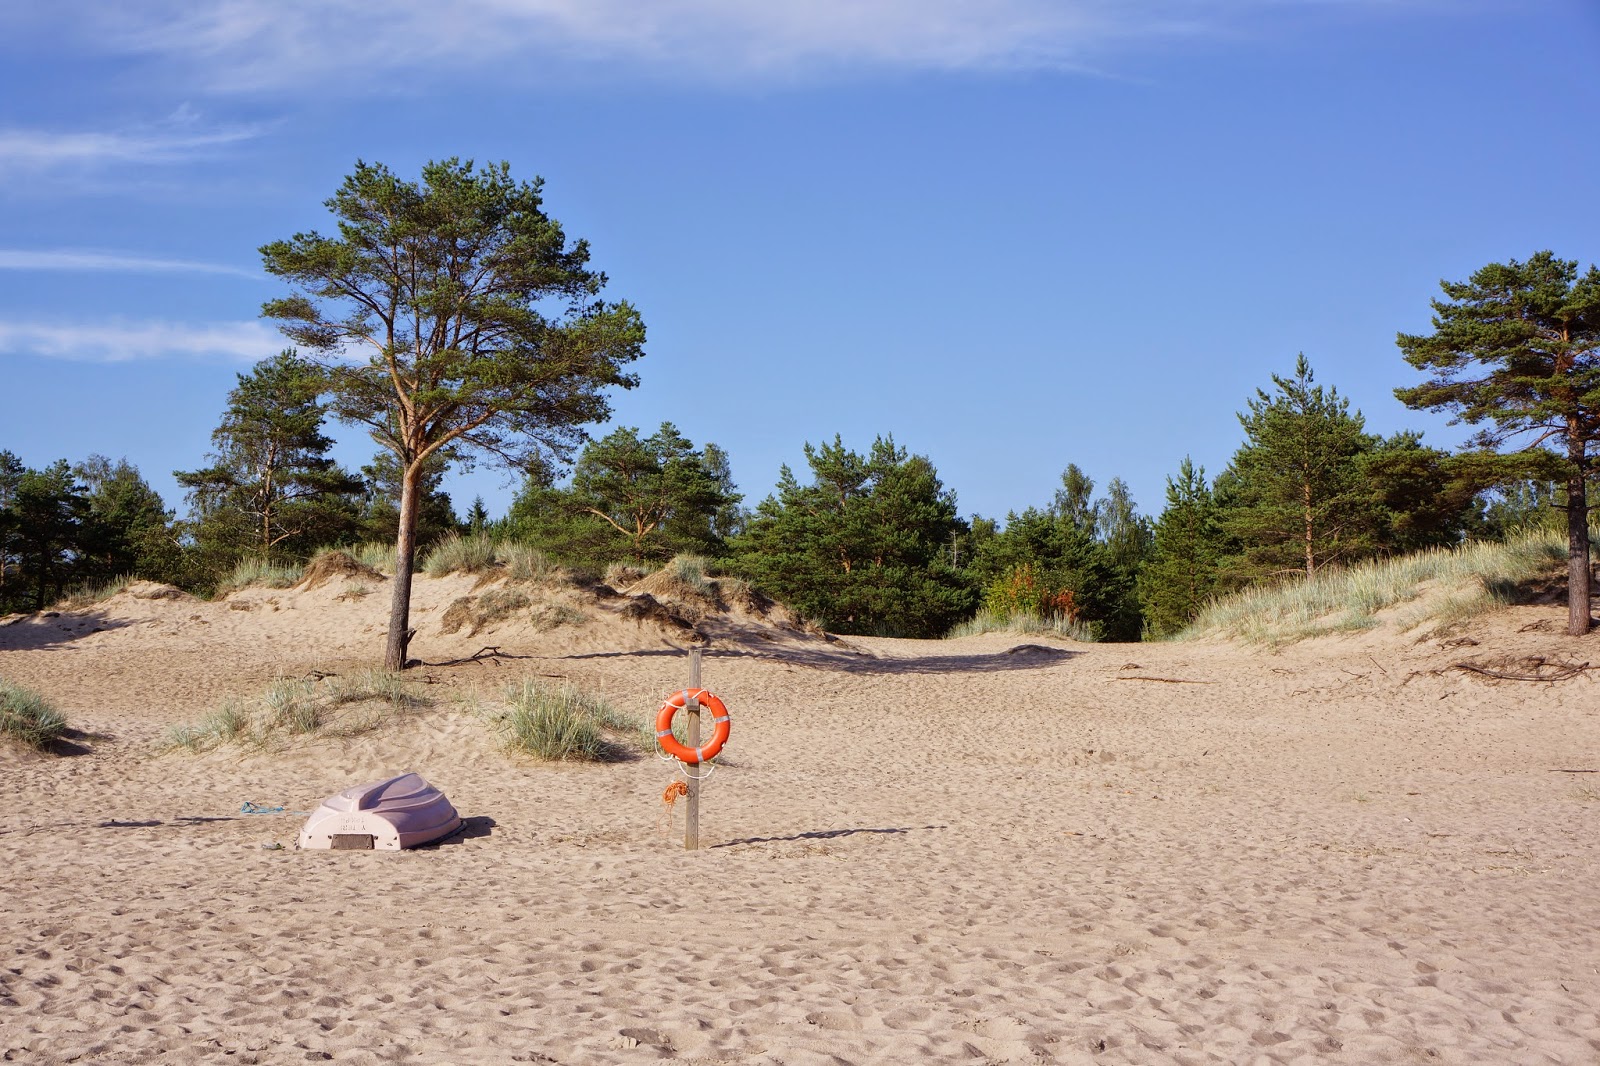 yyteri beach sandy beach in finland